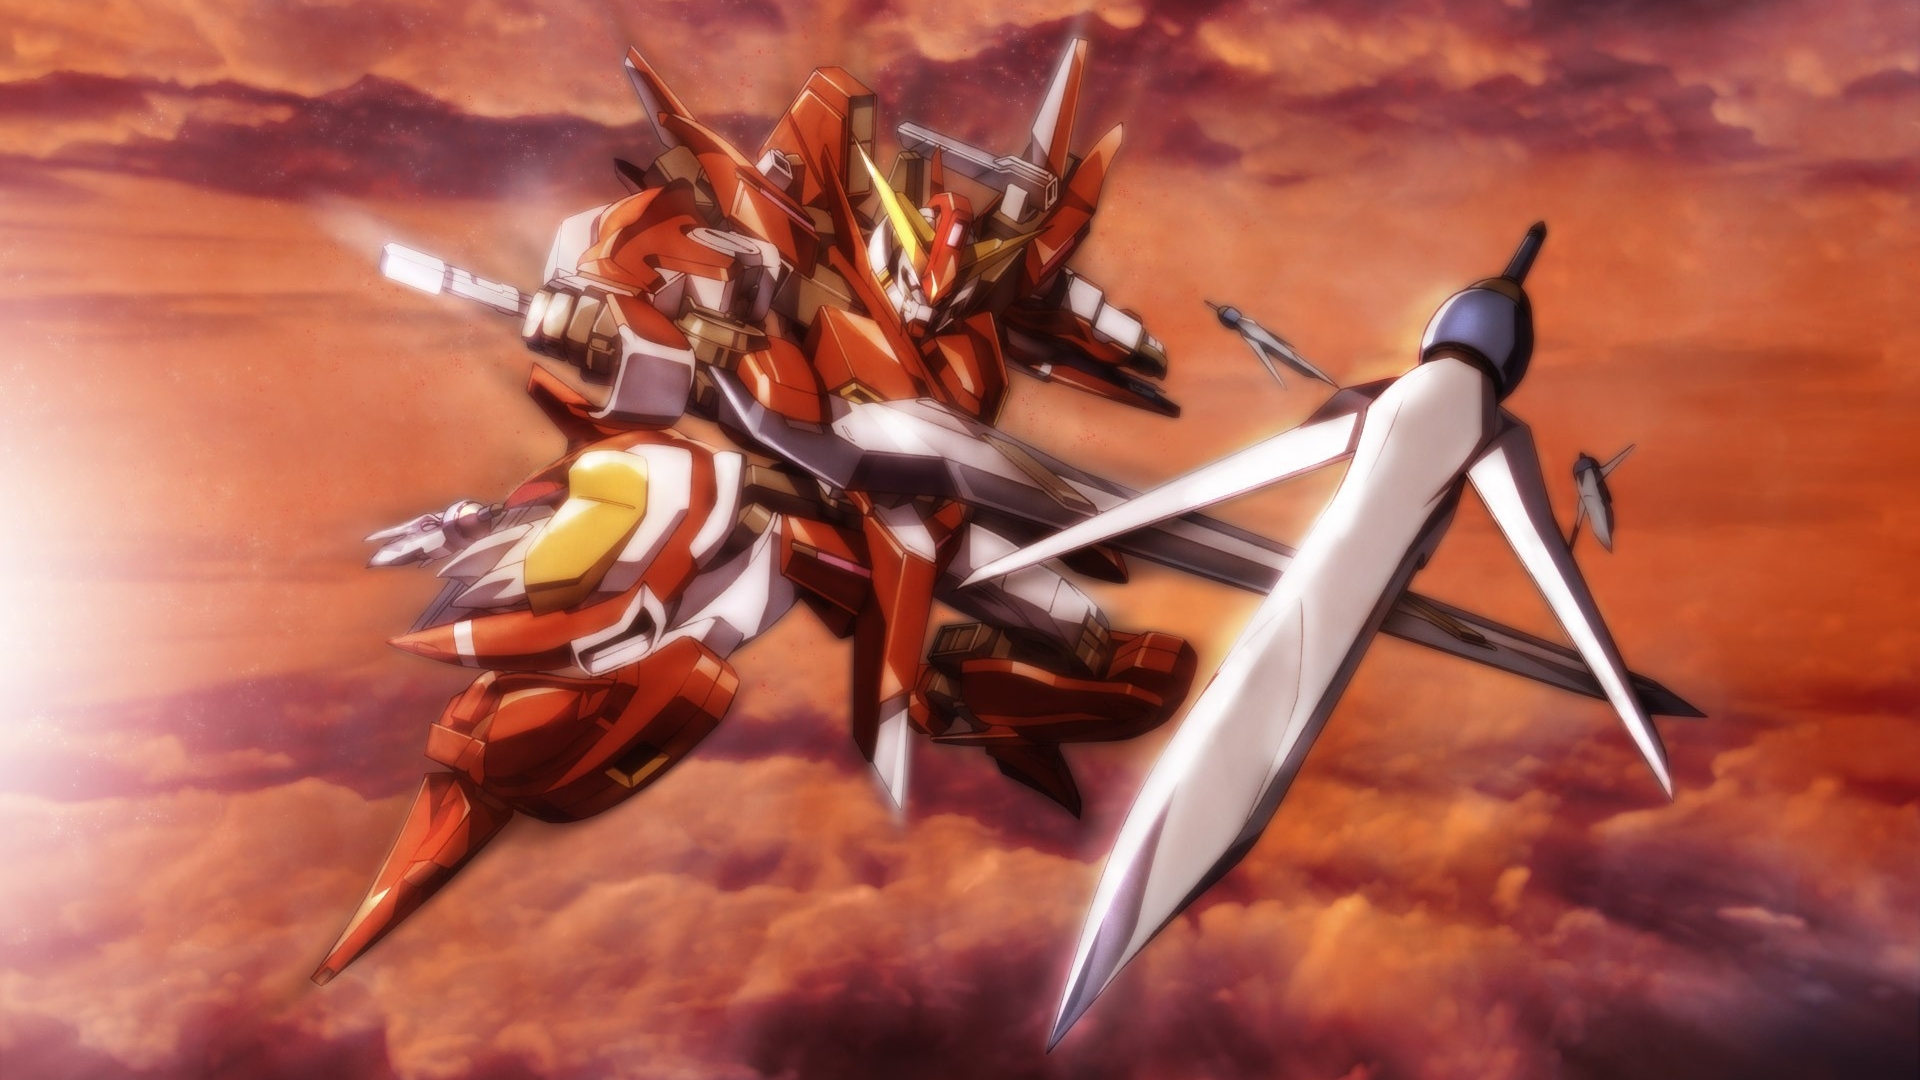 Gundam, Троицкий, Gundam 00 - обои на рабочий стол